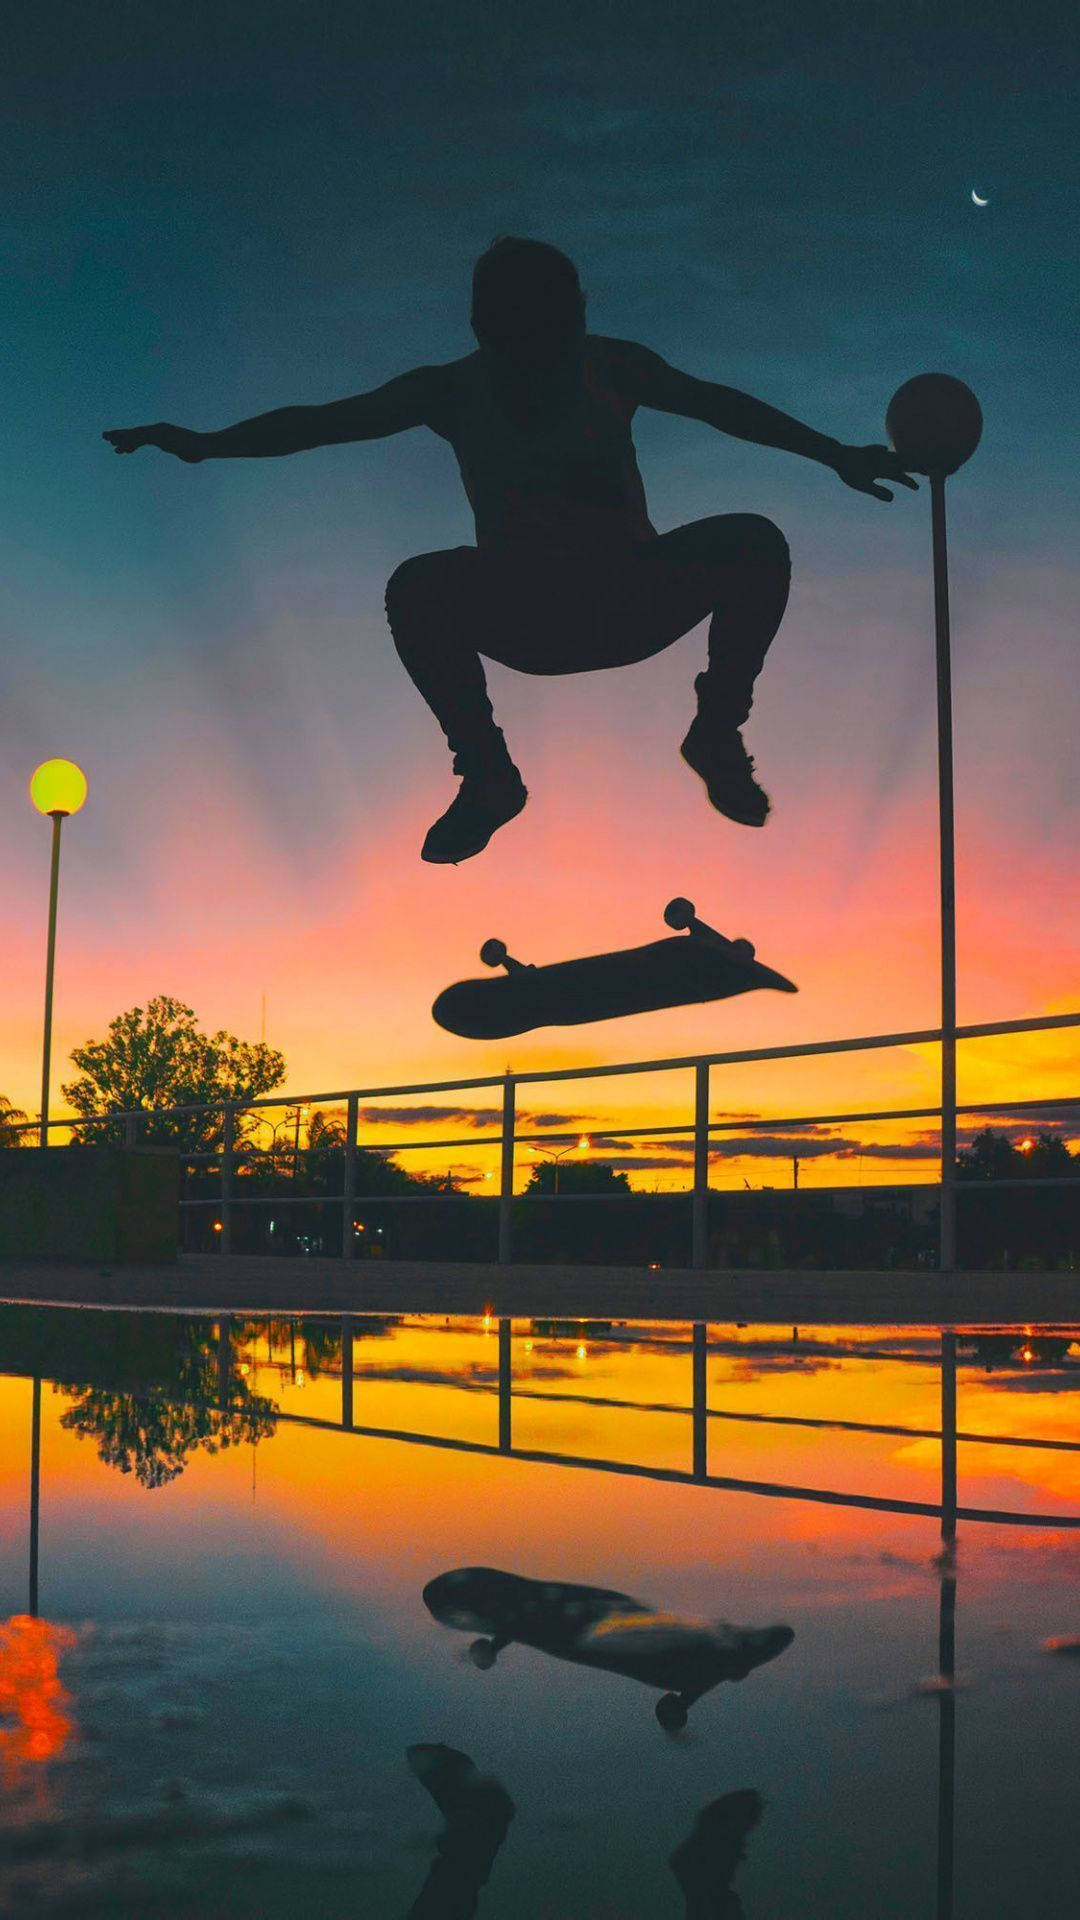 Aesthetic Skateboard Silhouette Man Background